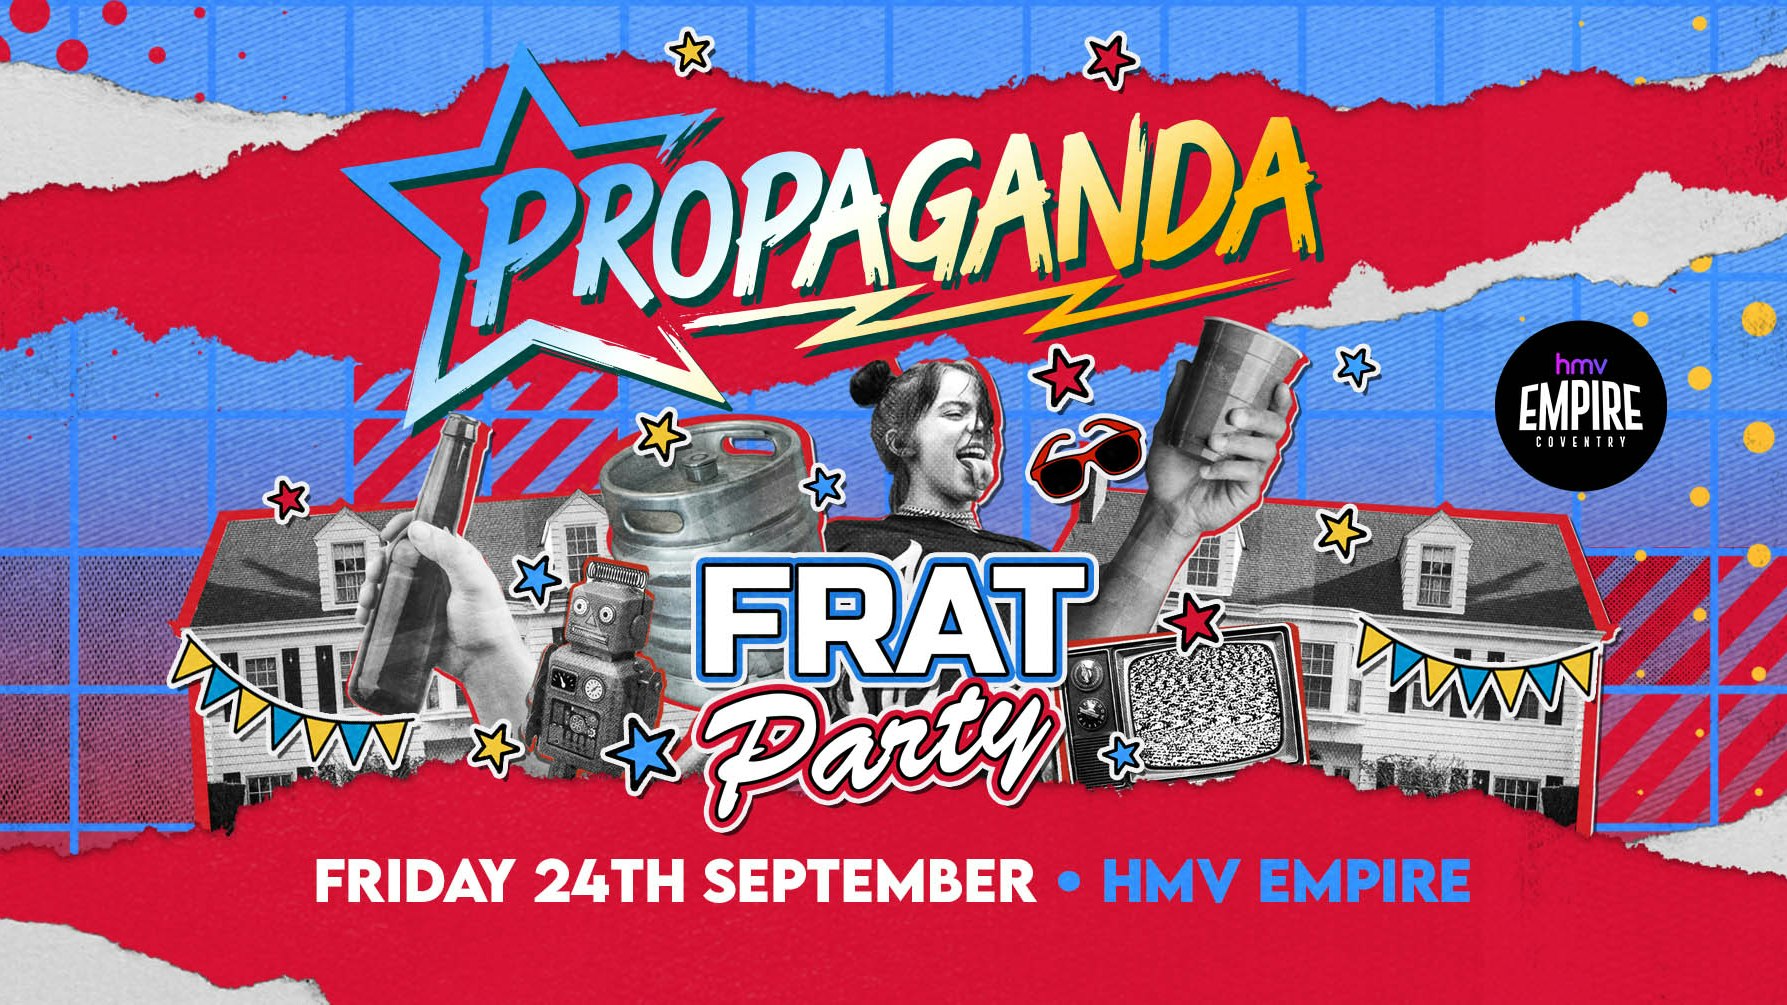 Propaganda Coventry –  Frat Party!